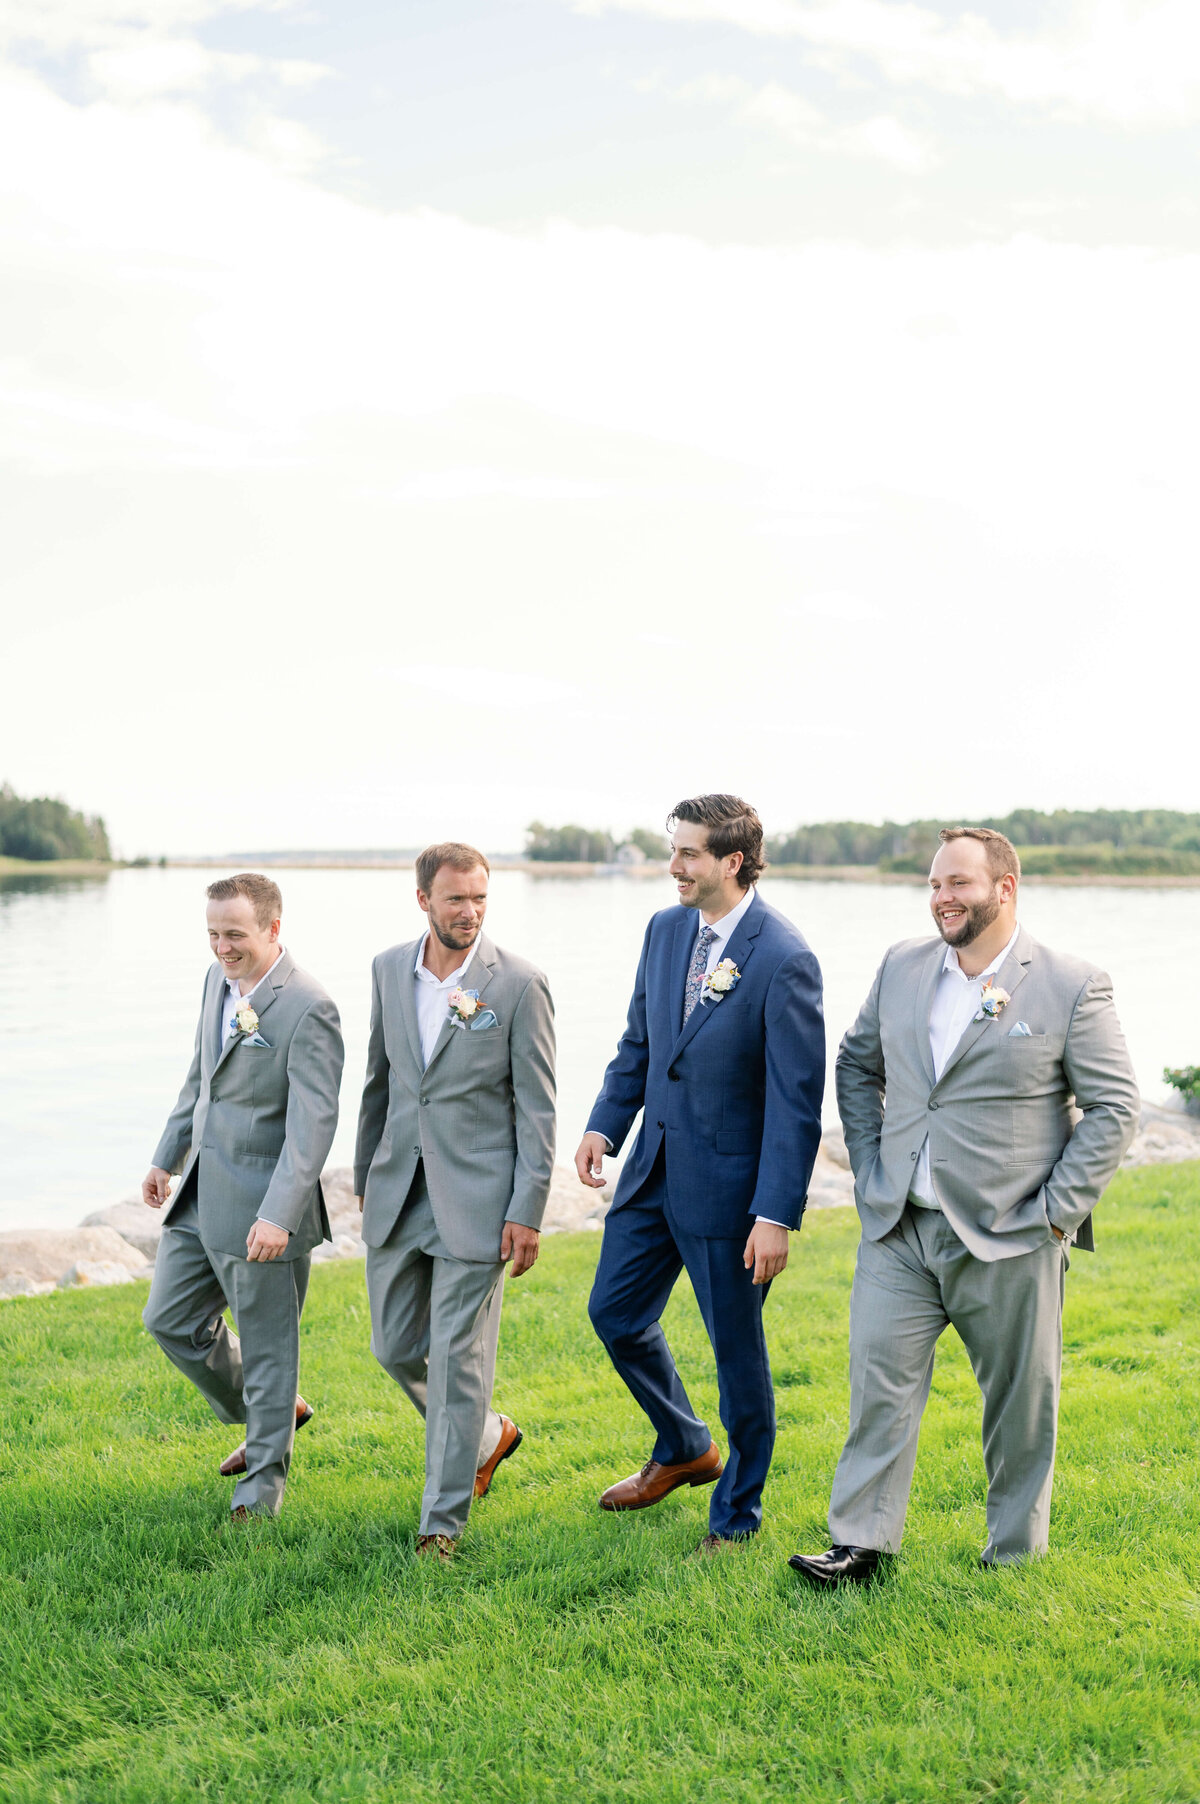 Groom walking along with groomsmen at Oak Island Resort, Nova Scotia